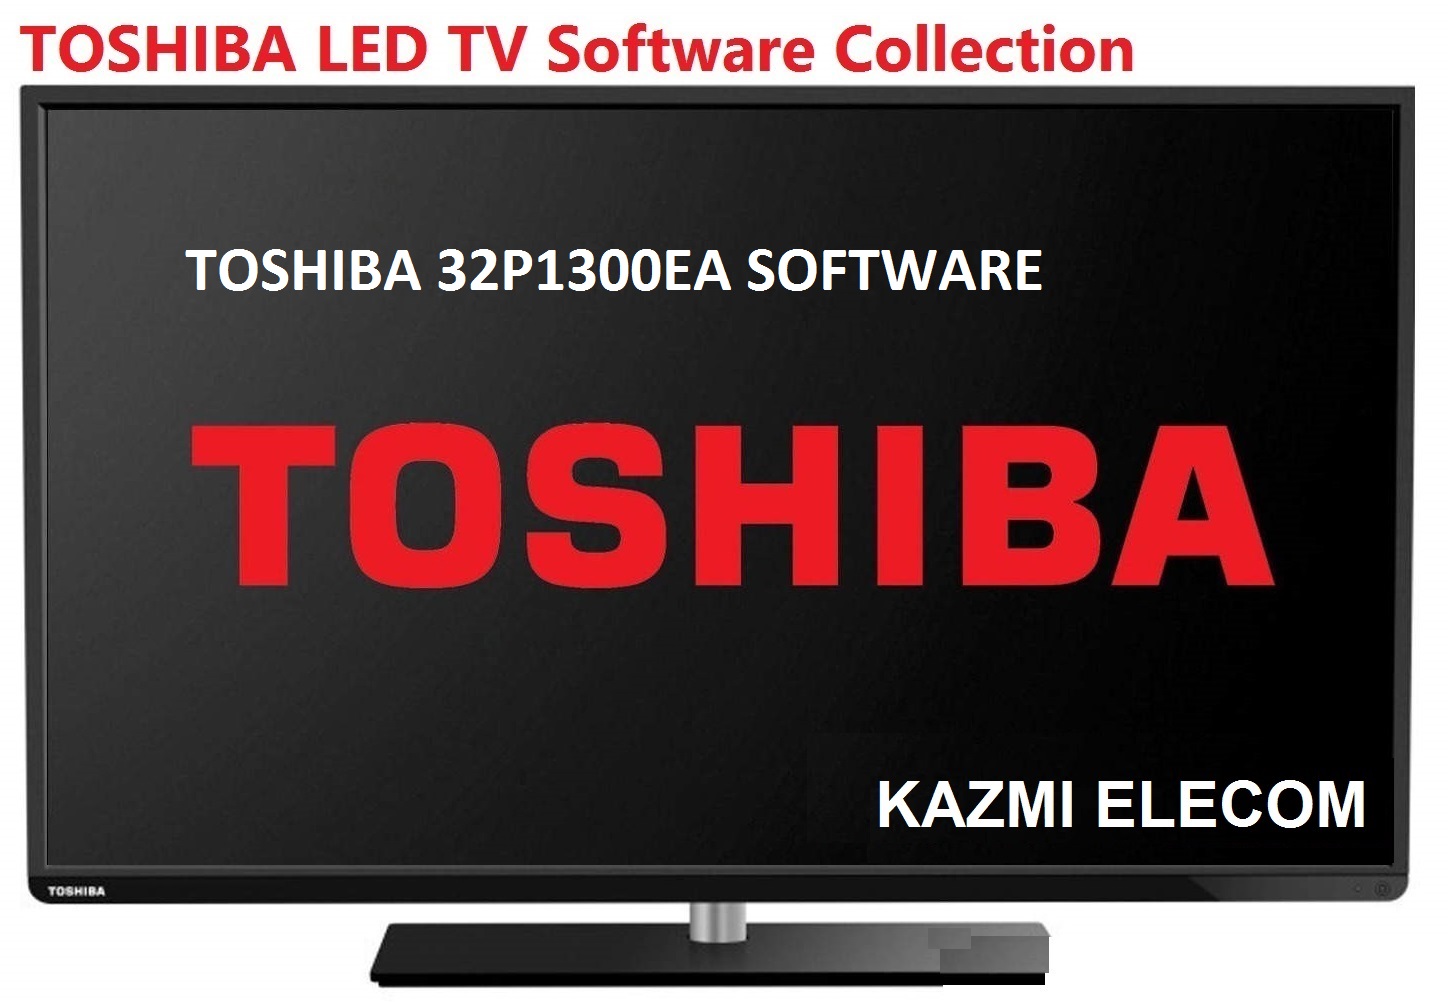 Toshiba 32P1300Ea